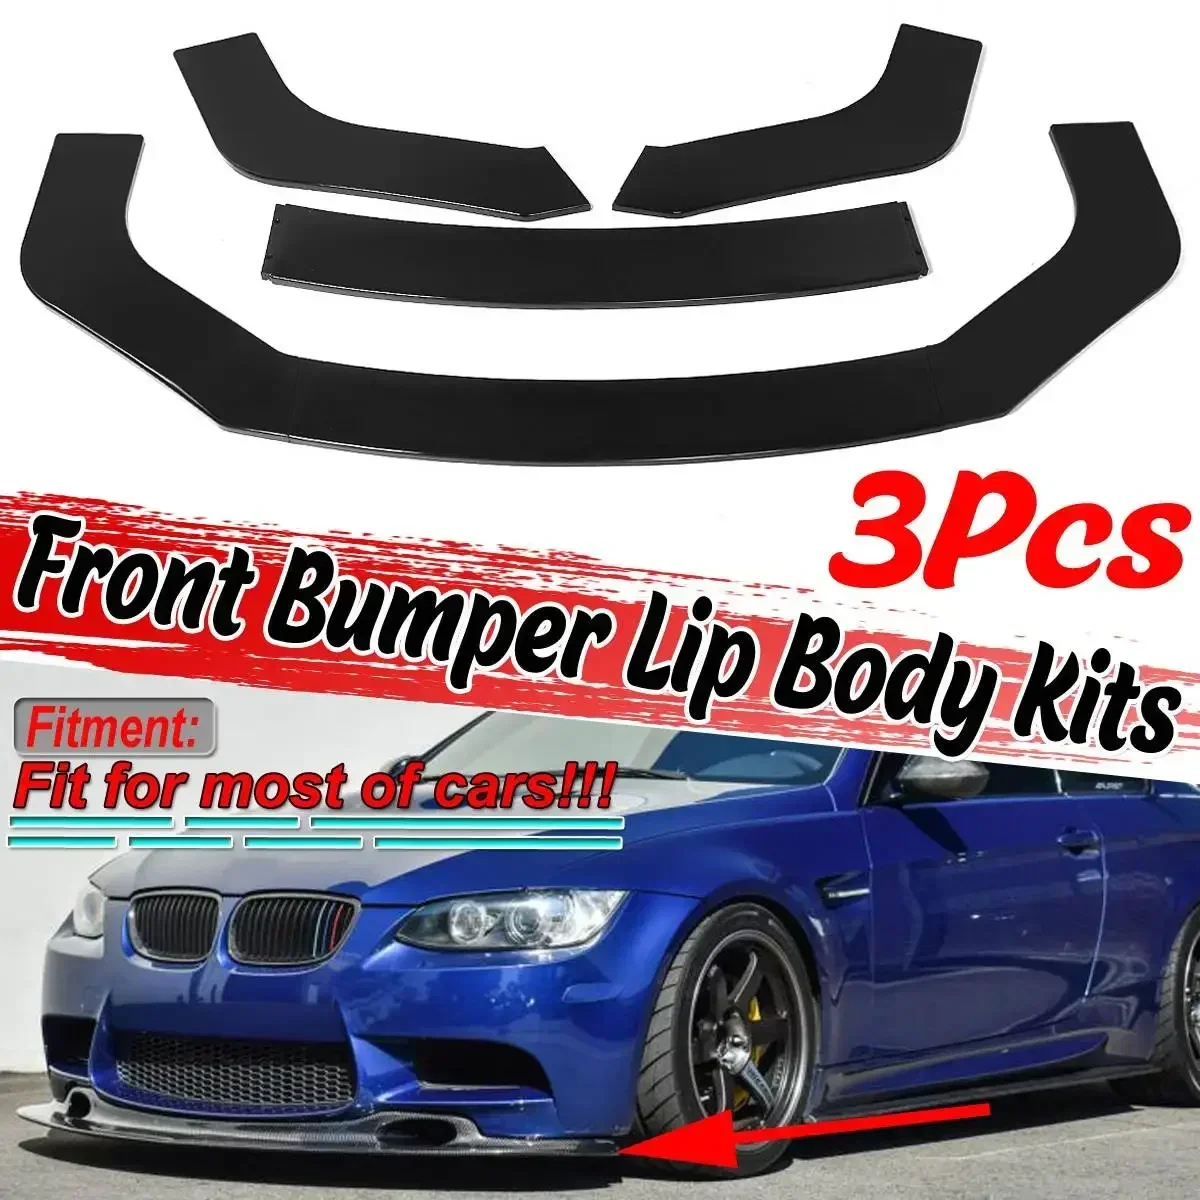 

Car Universal Front Lip Chin Bumper Spoiler For BMW E39 E46 E53 E90 E92 E93 E60 E61 E70 X6 E71 X1 For VW Golf MK5 6 7 Body Kit